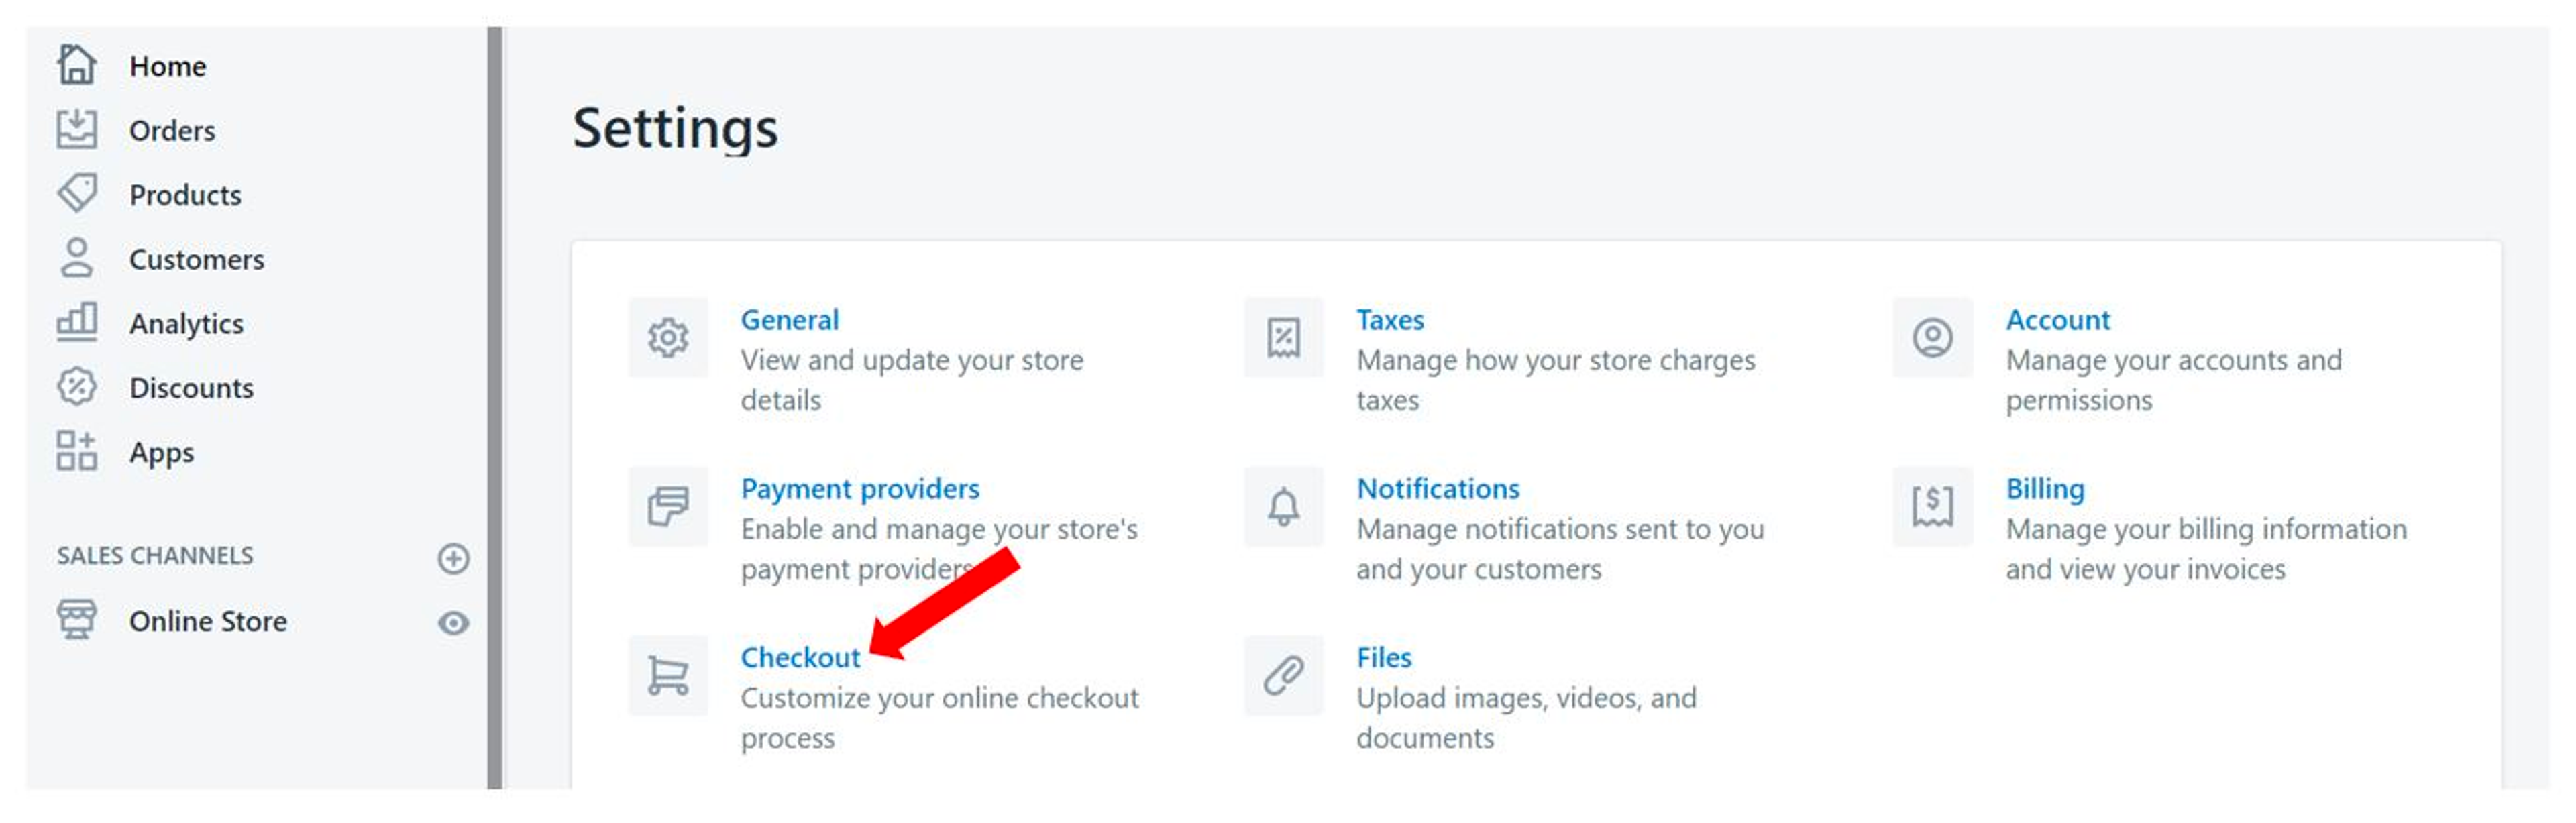 Shopify settings screen